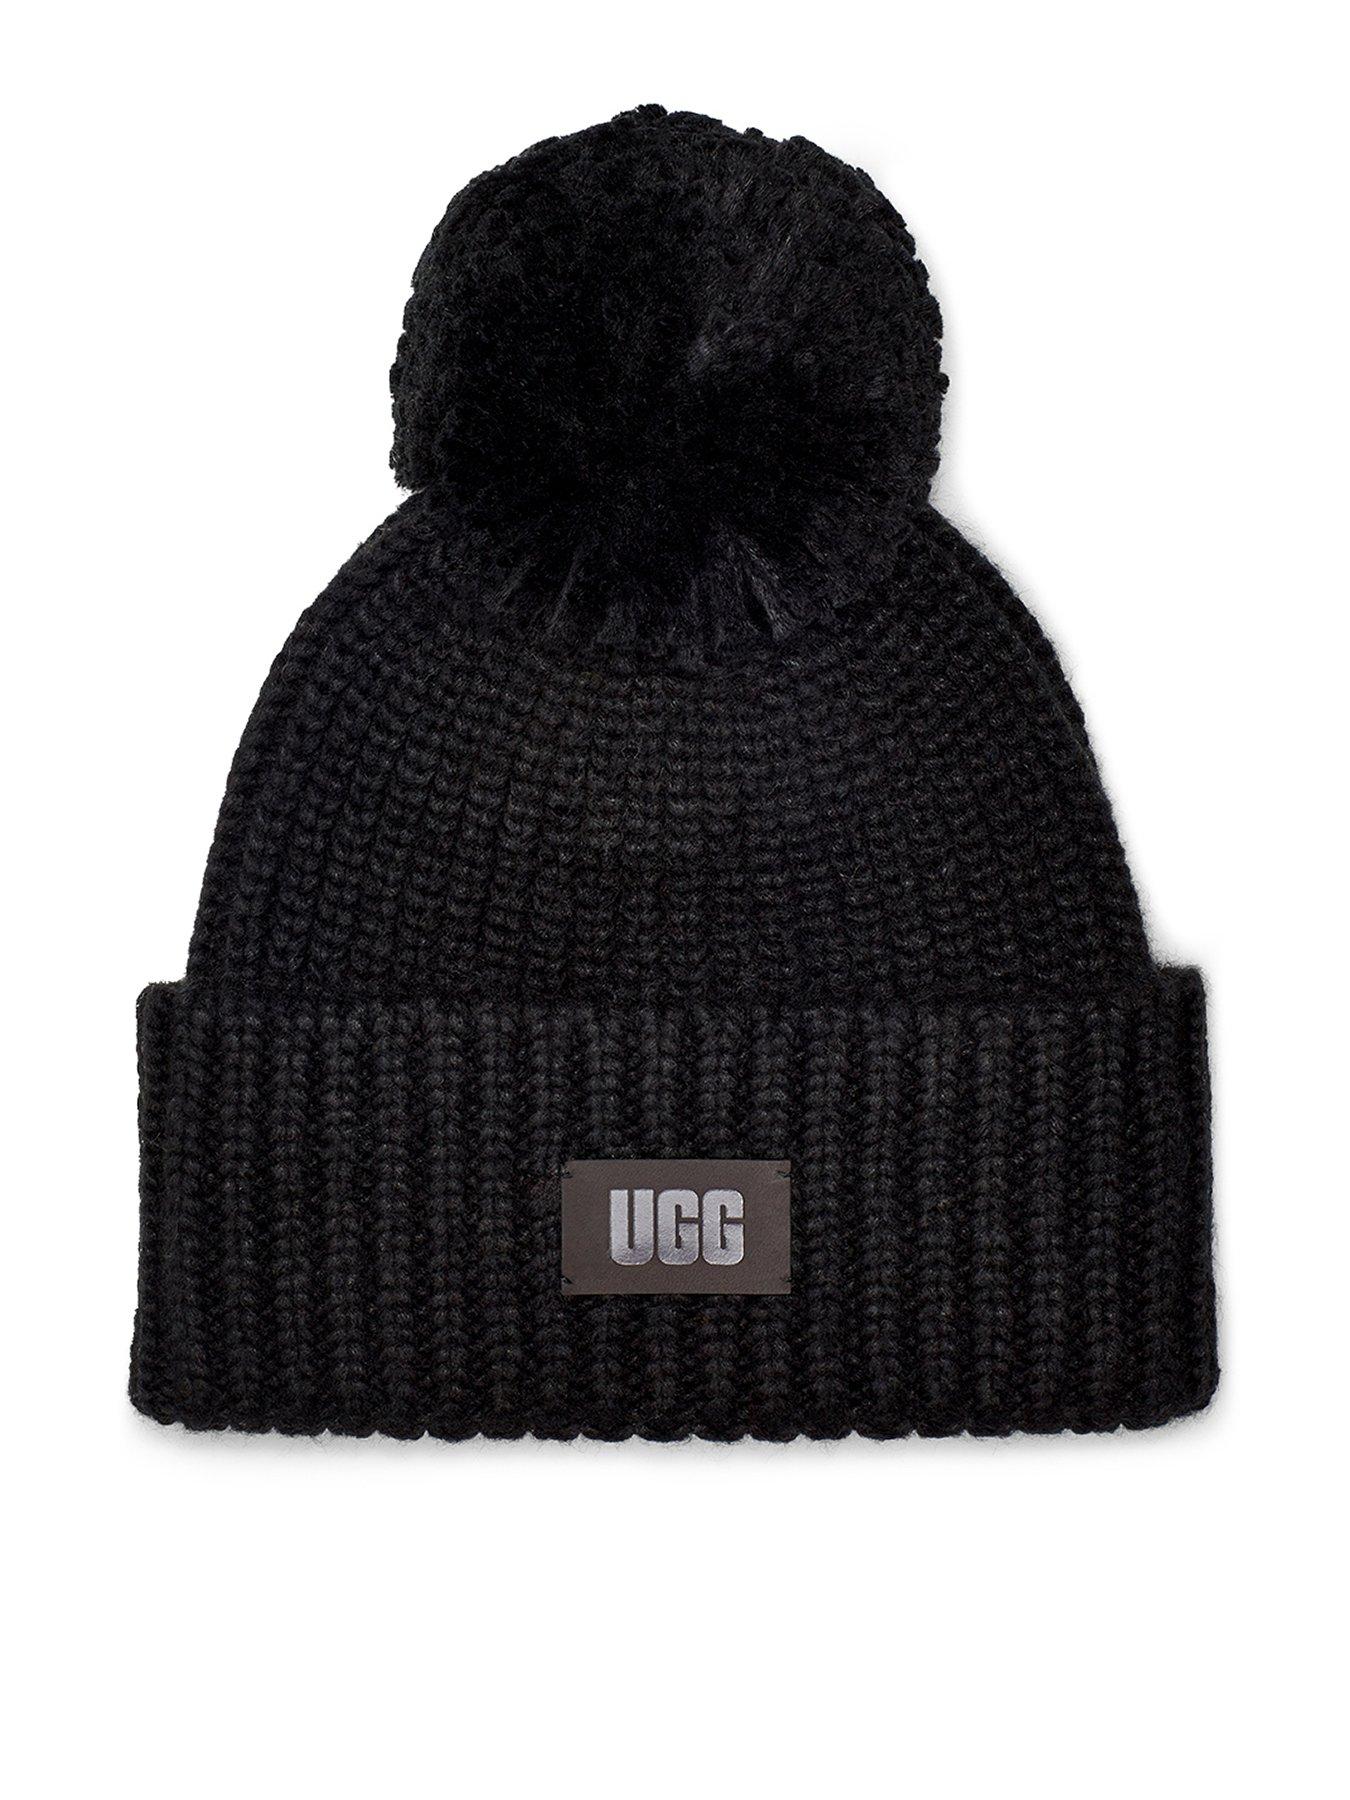 UGG Chunky Rib Knit Beanie Hat - Black 